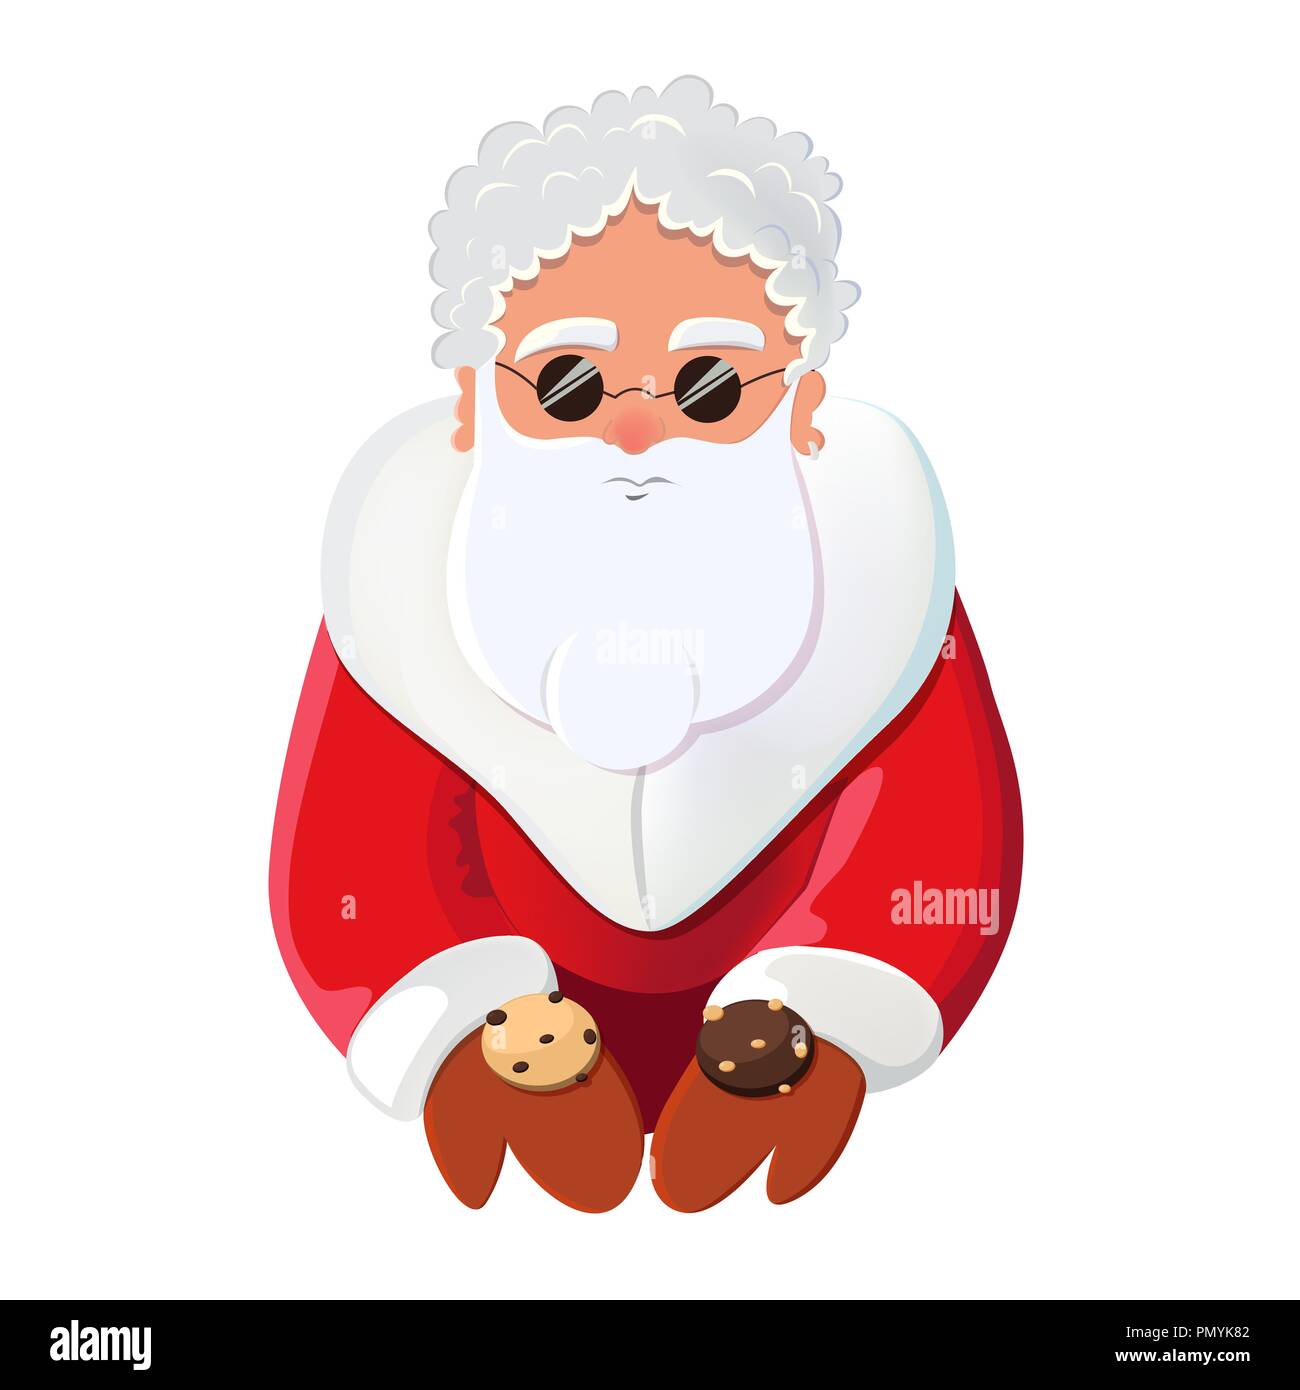 Santa Claus character offering cookies. Alternative Santa vector illustration.Stylized Santa wearing sunglasses as an element for secret Santa party. Stock Vector